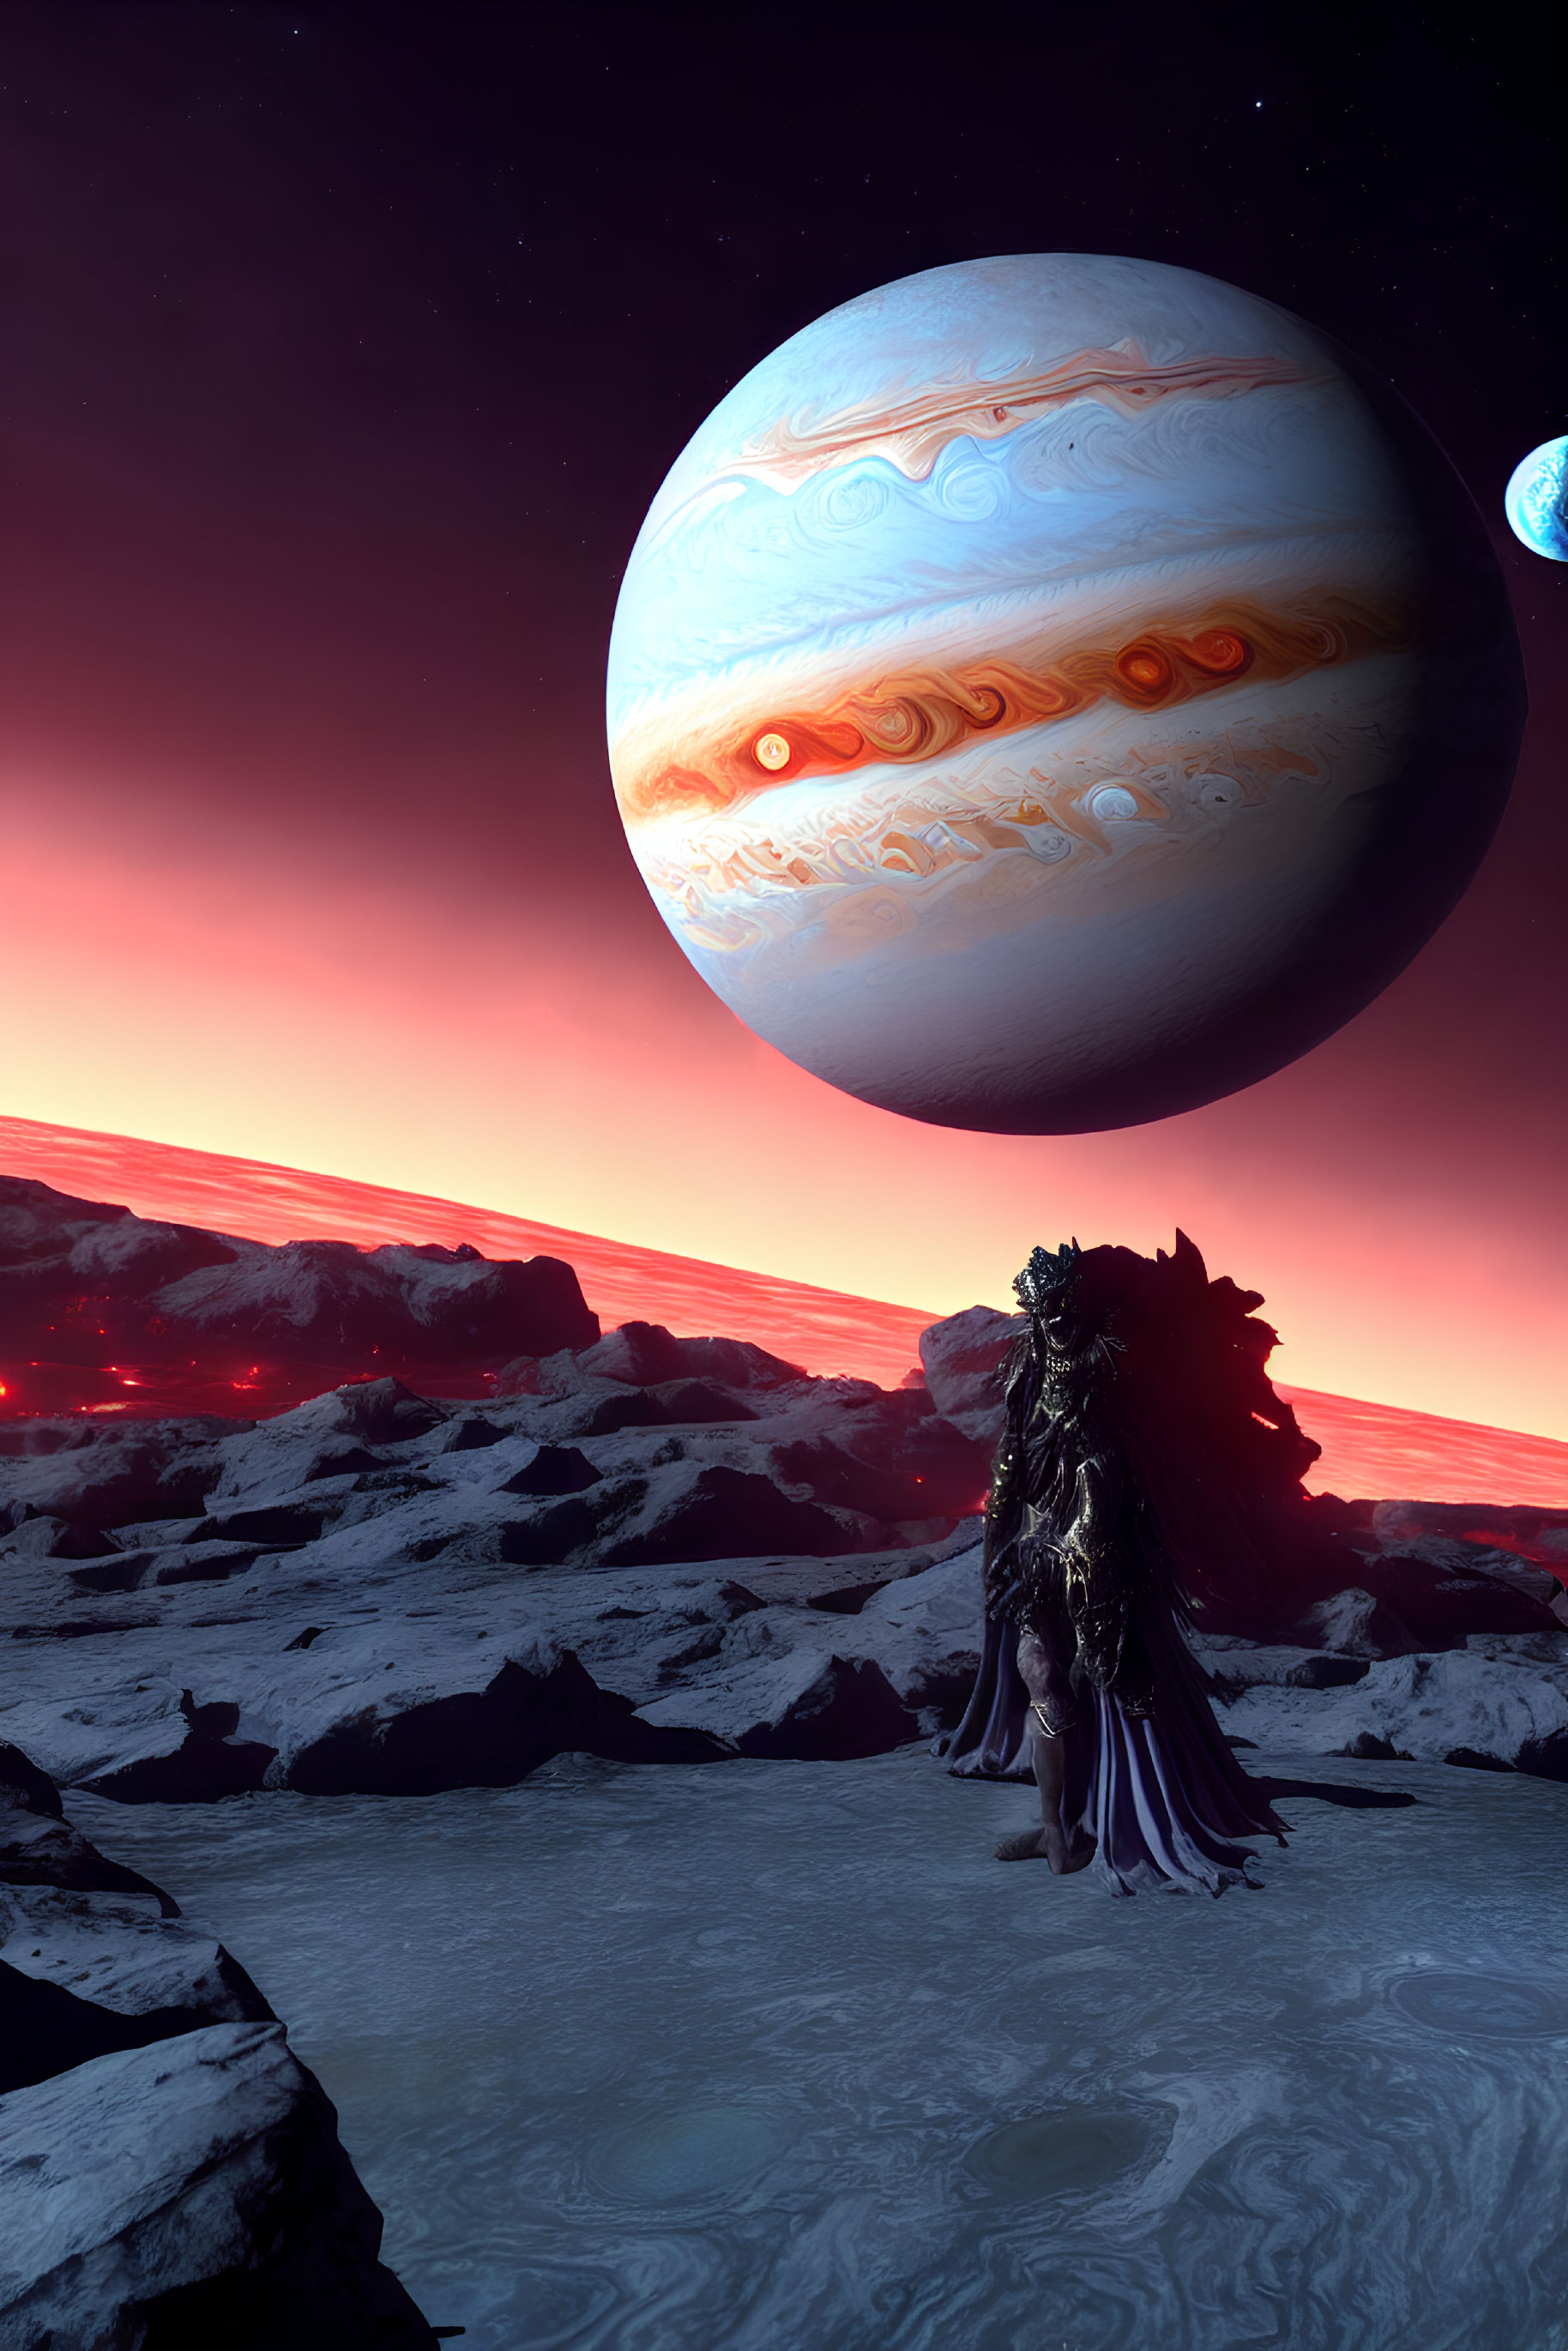 Cloaked figure on rocky alien landscape under giant Jupiter-like planet